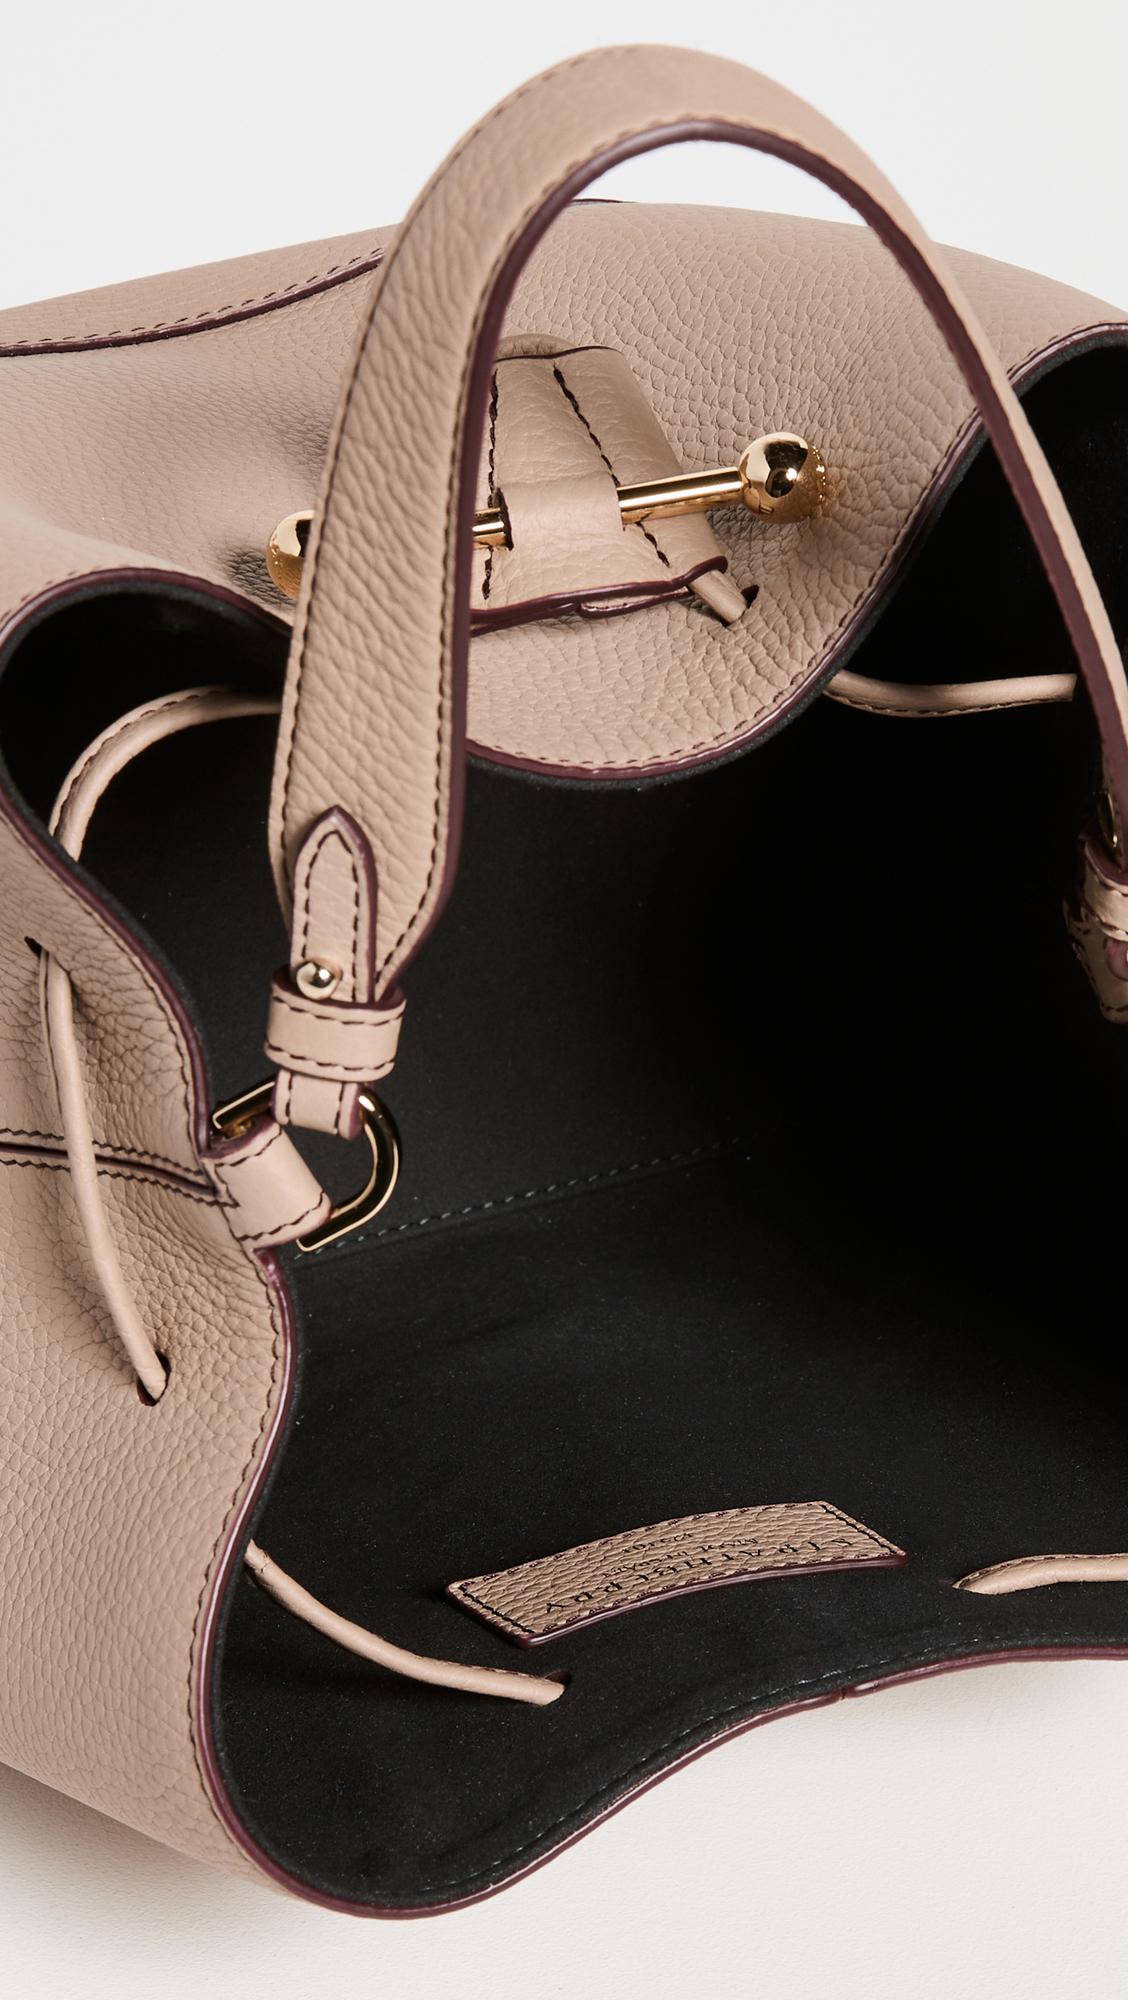 Strathberry Leather Midi Lana Osette Bucket Bag